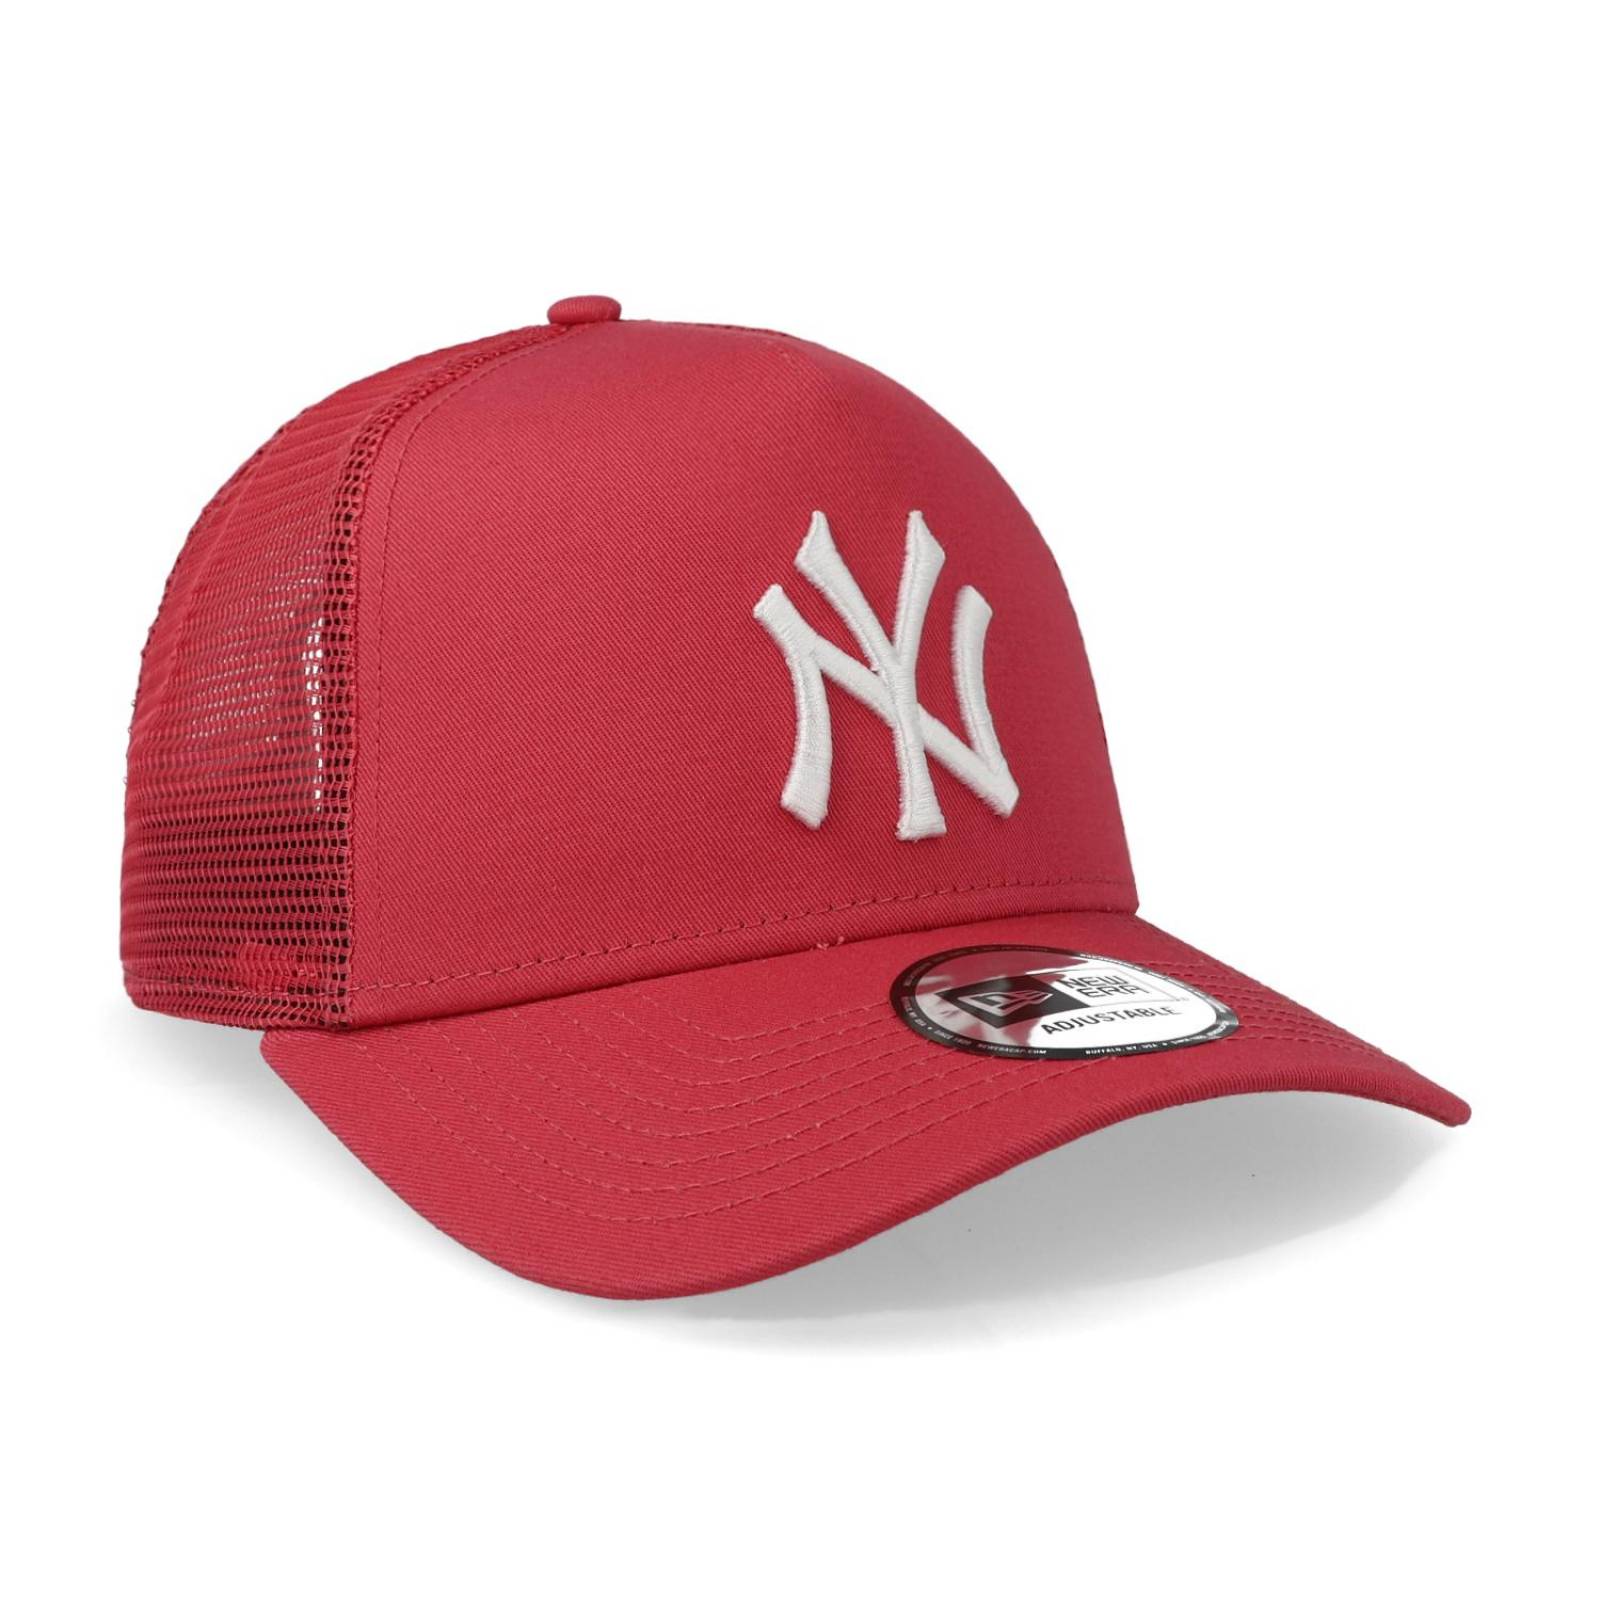 Gorra curva roja ajustable para niño 9FORTY Essential de New York